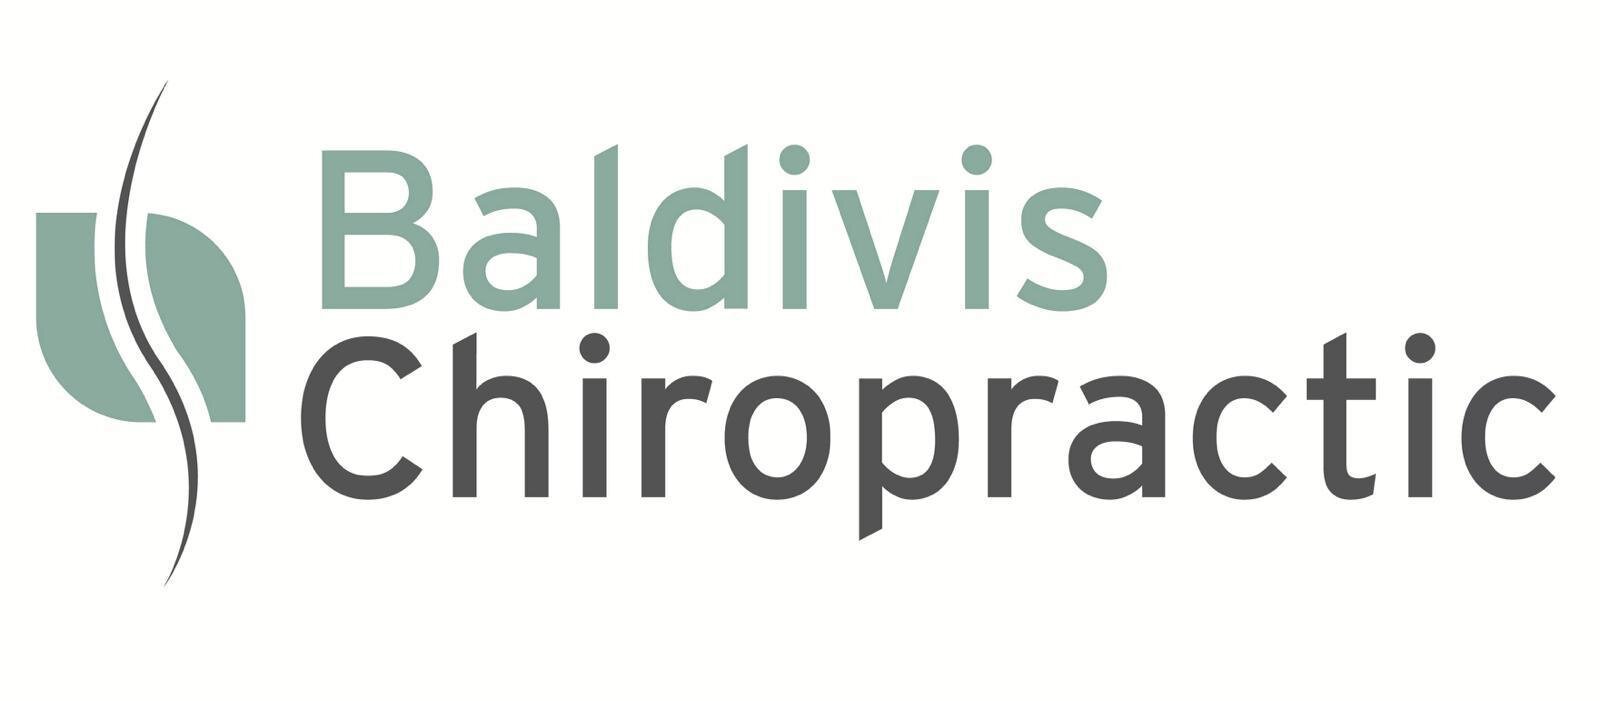 Baldivis Chiropractic | Perth, Baldivis, Western Australia